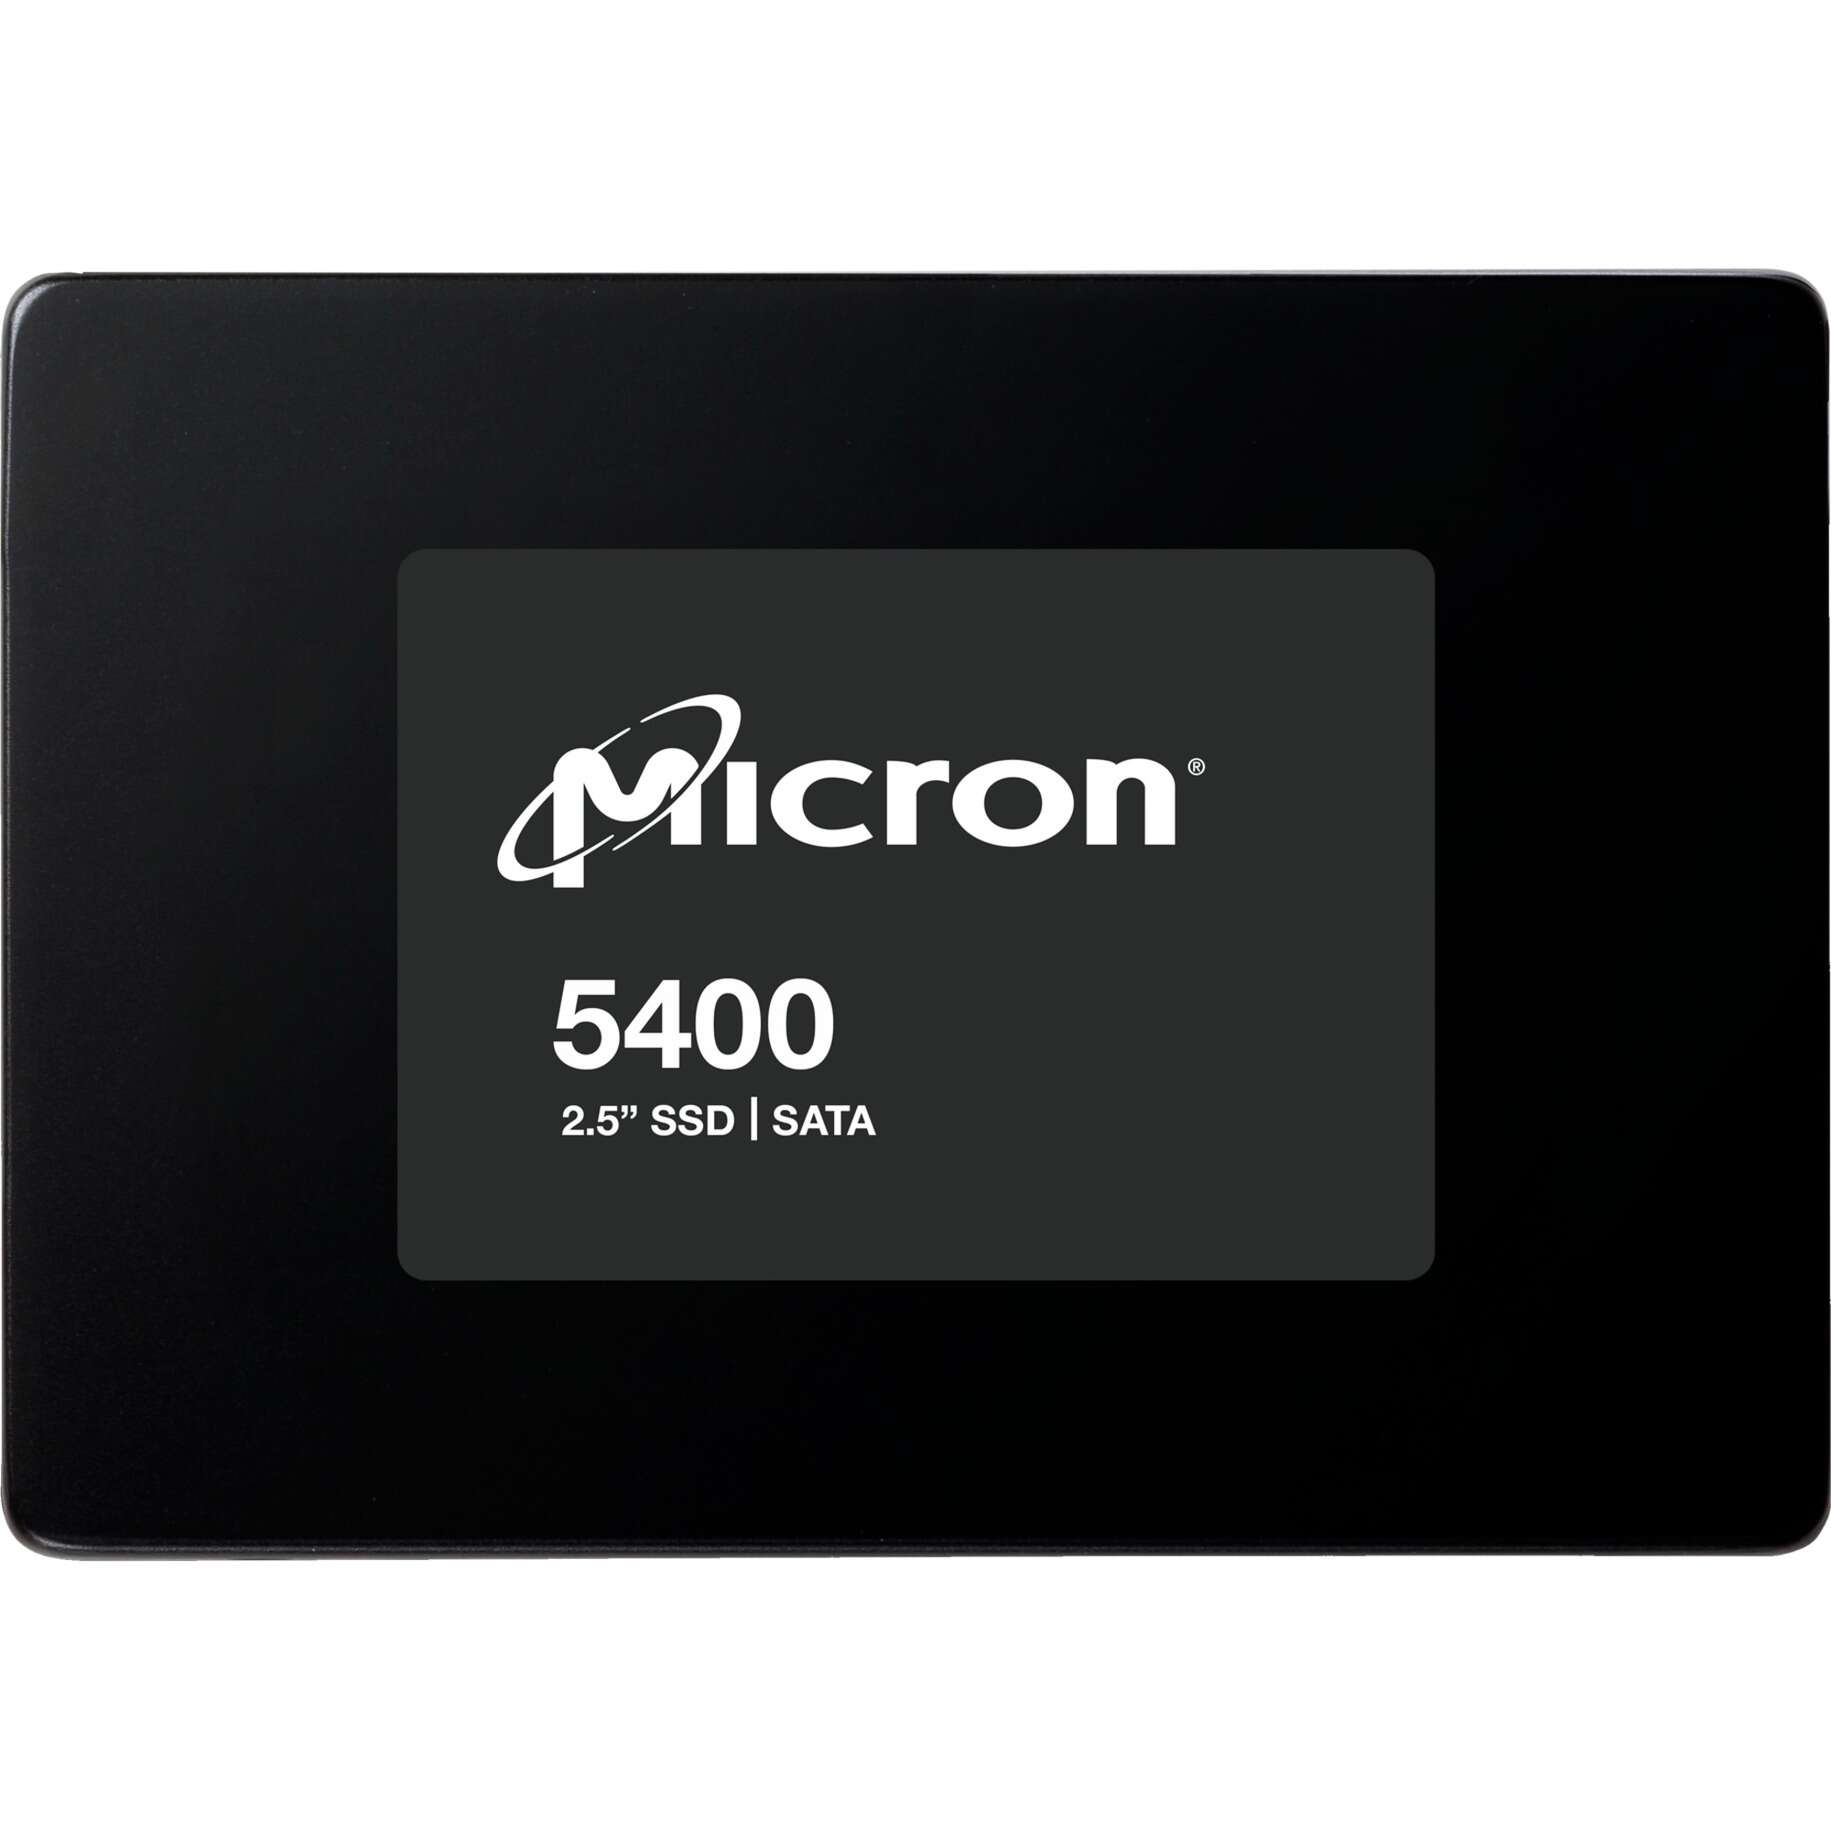 Micron 480gb 5400 max 2.5" sata3 ssd